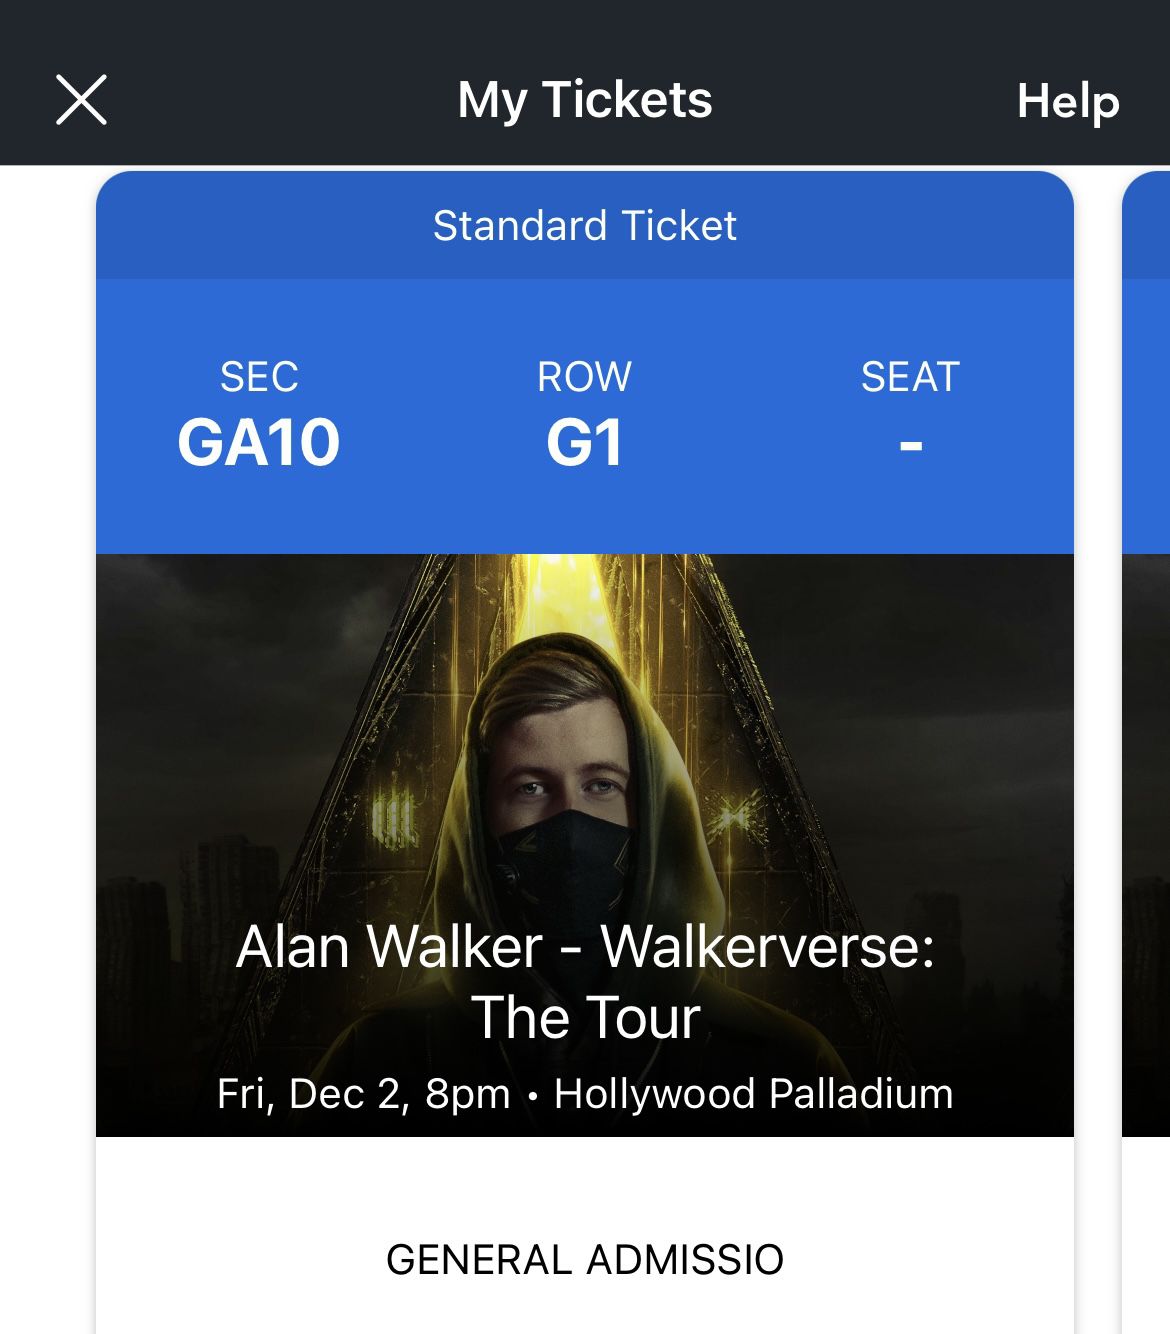 Alan Walker at the Hollywood Palladium x2 Tickets 